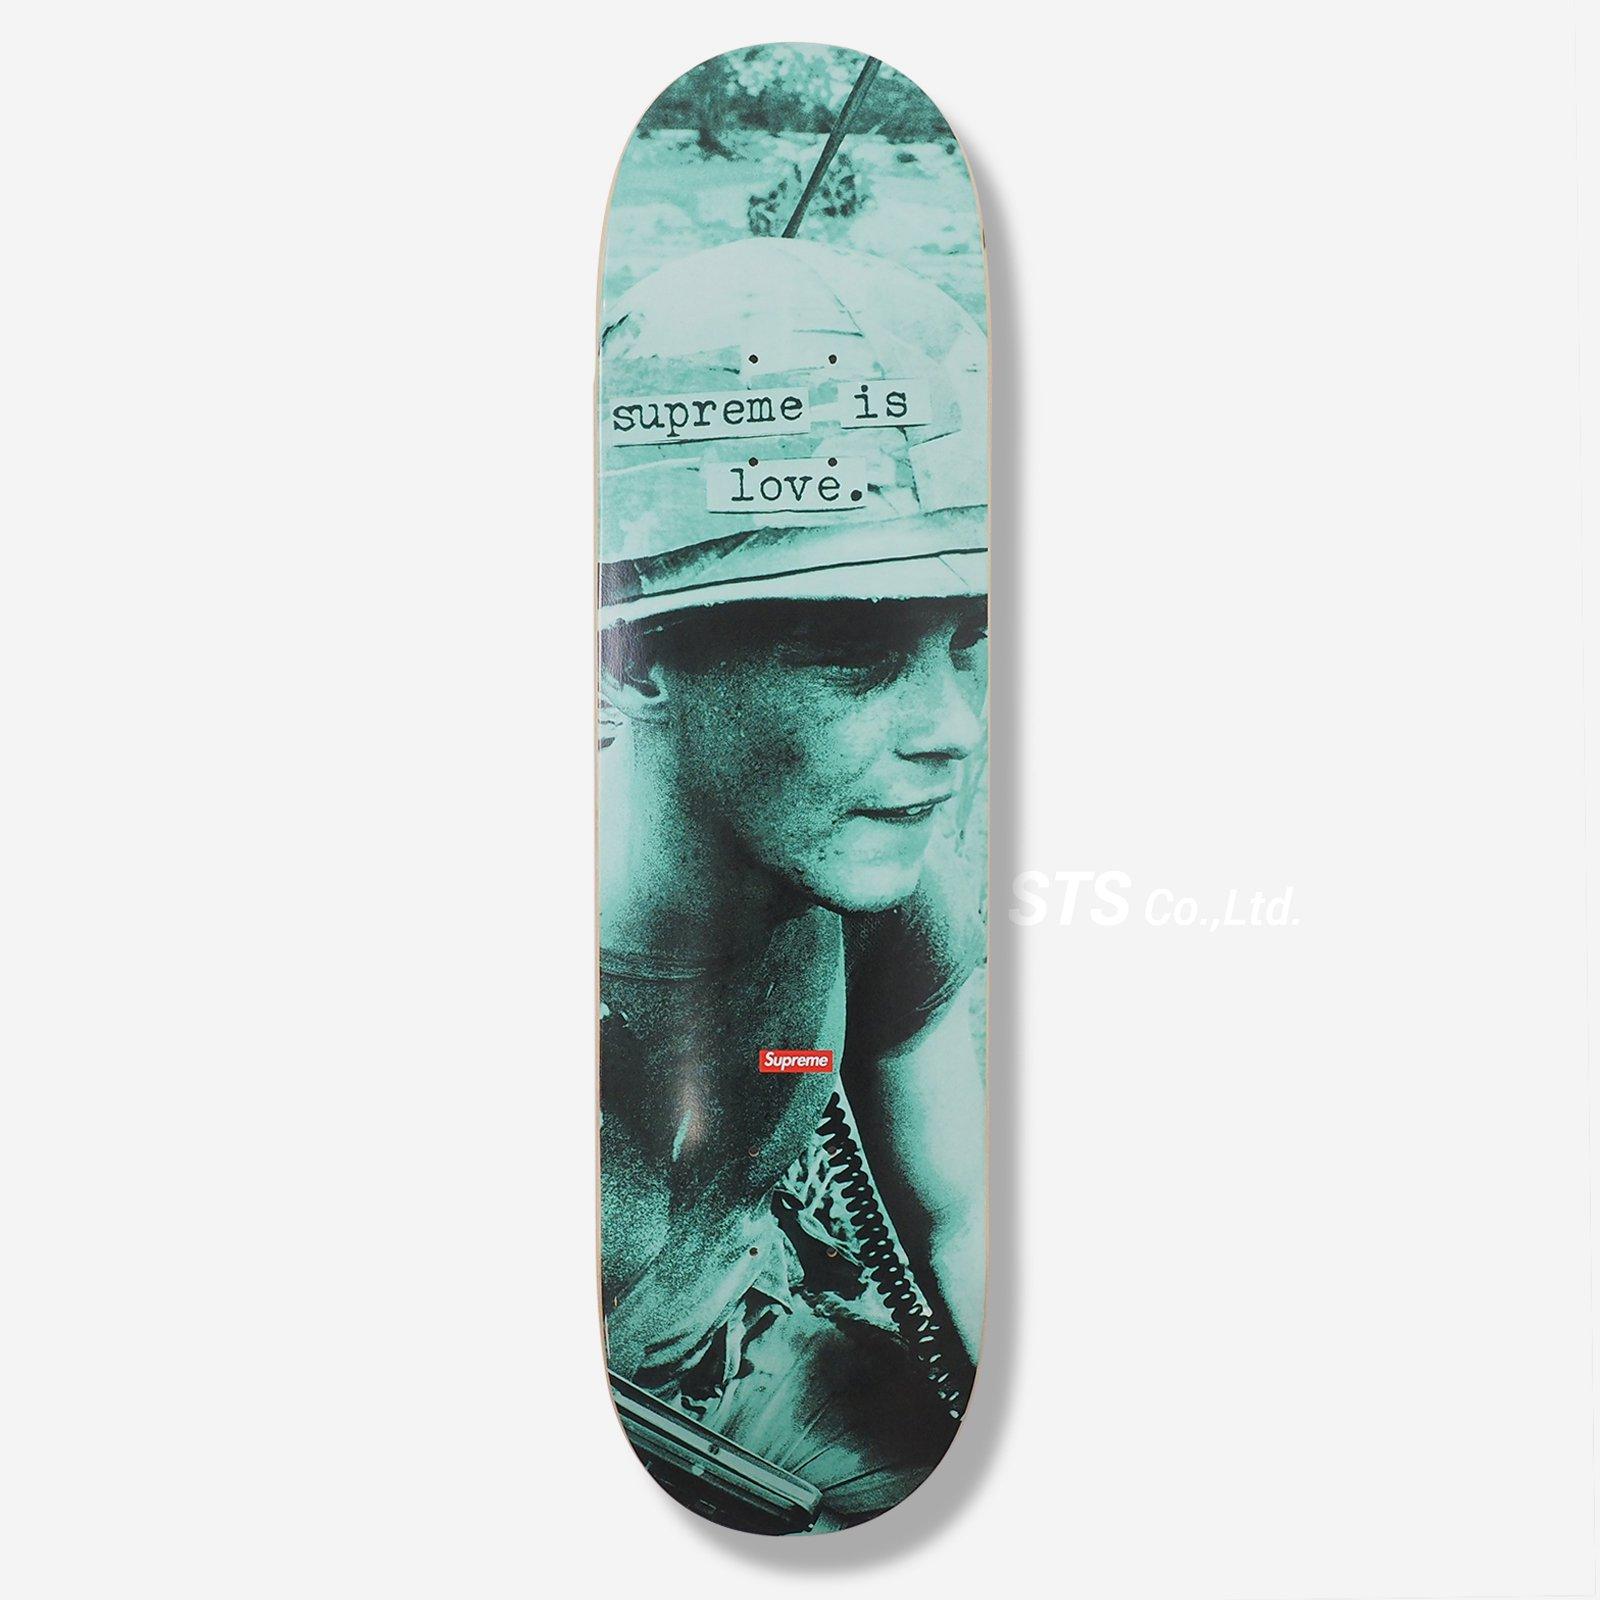 nan goldin supreme skateboard